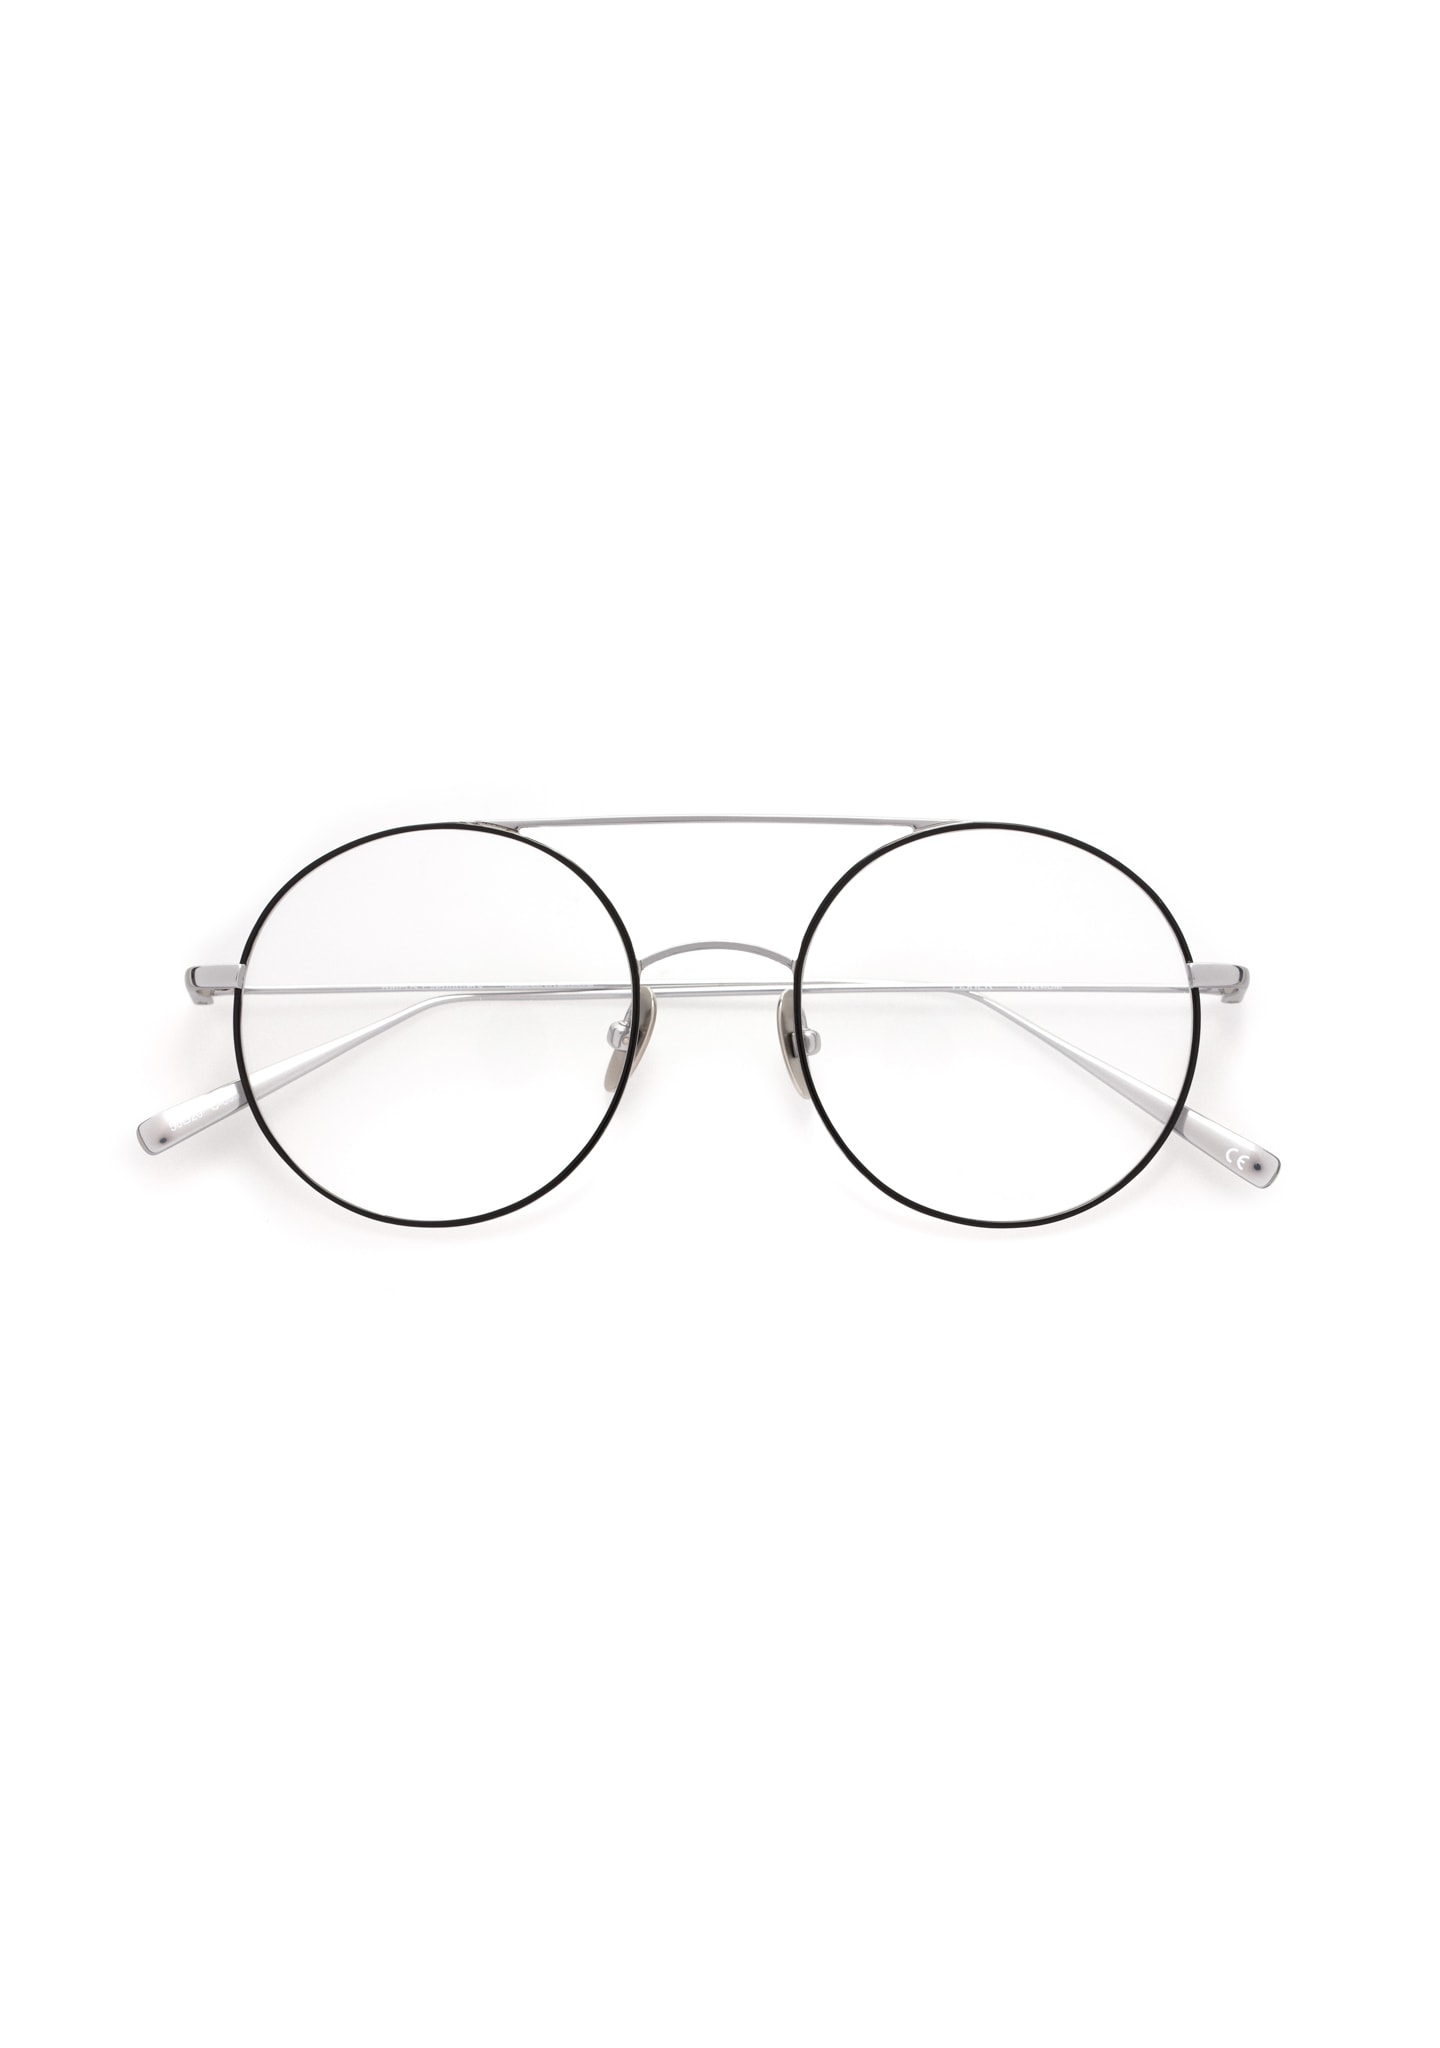 Eyeglasses HILL 1453624